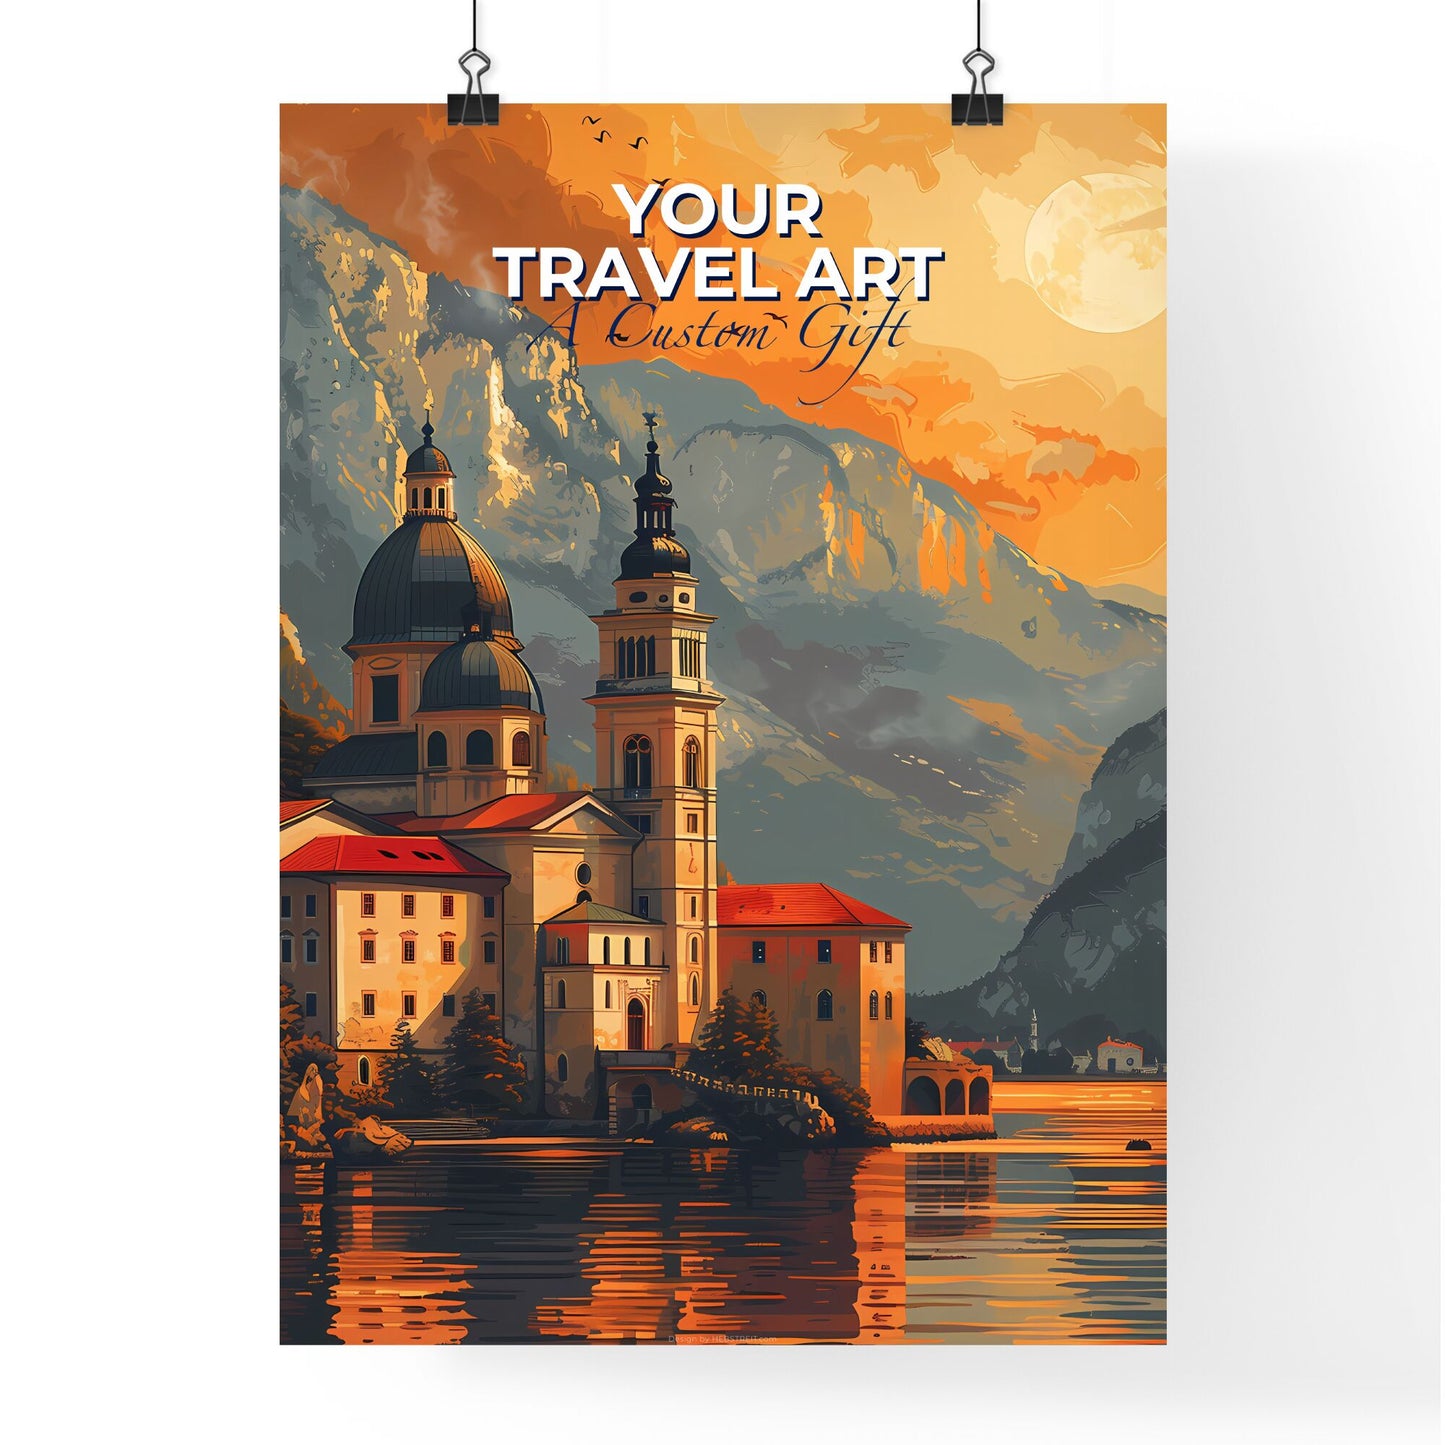 Custom TRAVEL Art Template - Let's design your's now!